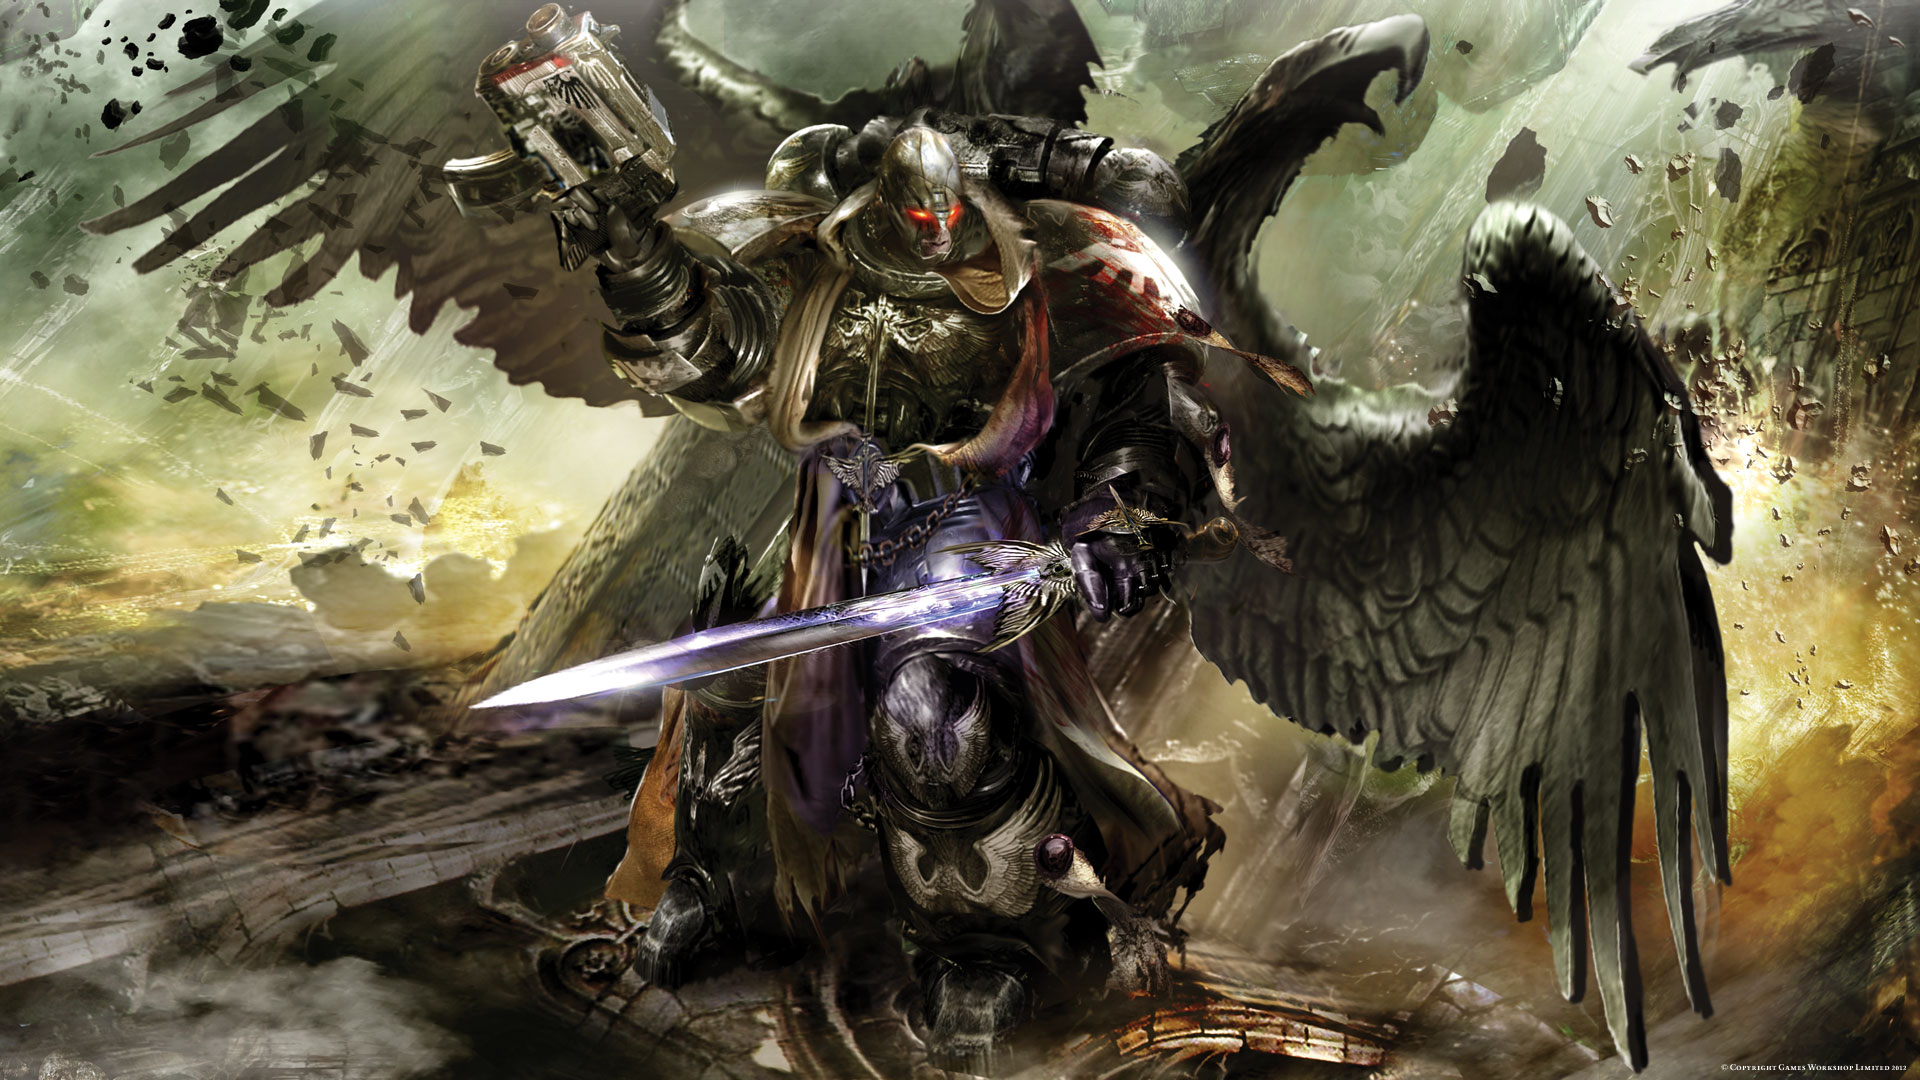 Warhammer 40,000 UltraWide 21:9 wallpapers or desktop backgrounds